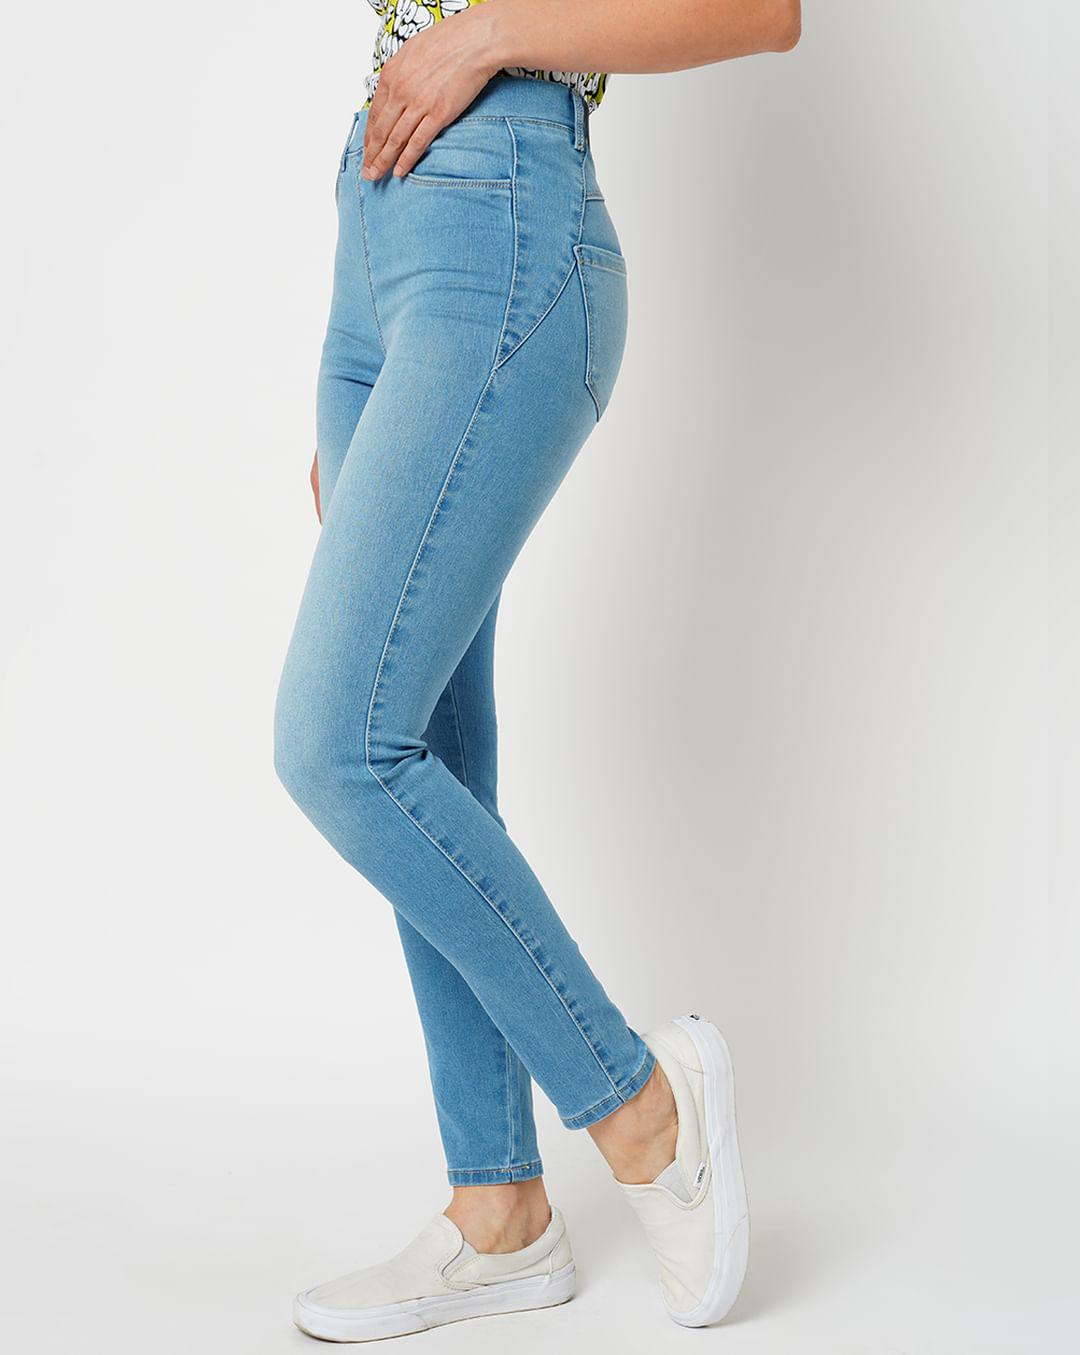 Stretchable Light Blue Mid Waist Jeans Jeggings Super Comfortable